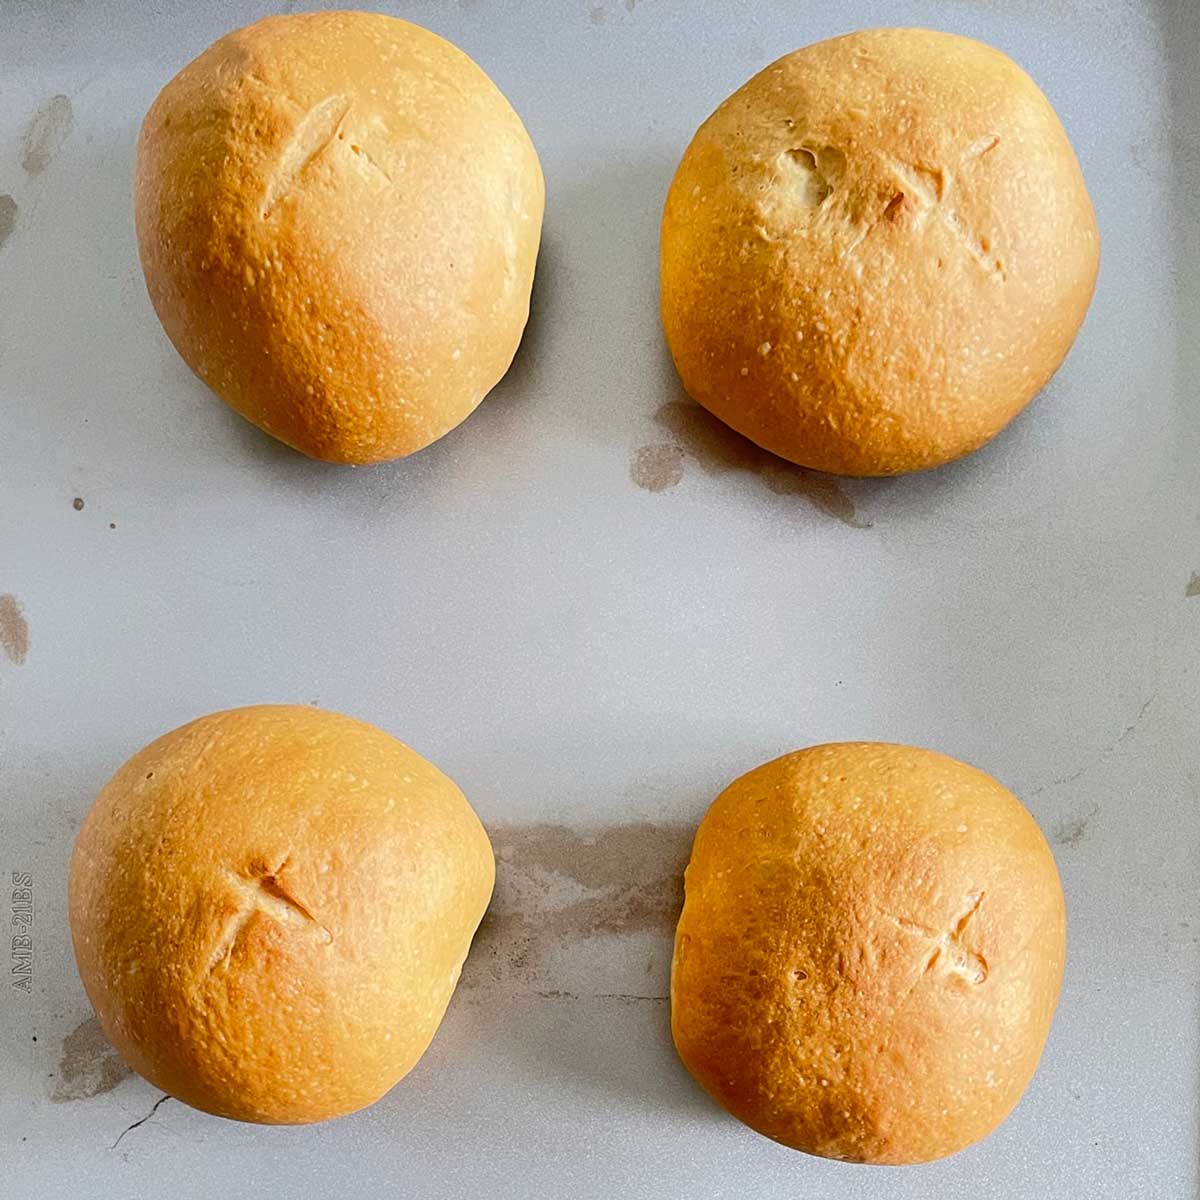 Bread bowl balls baked.